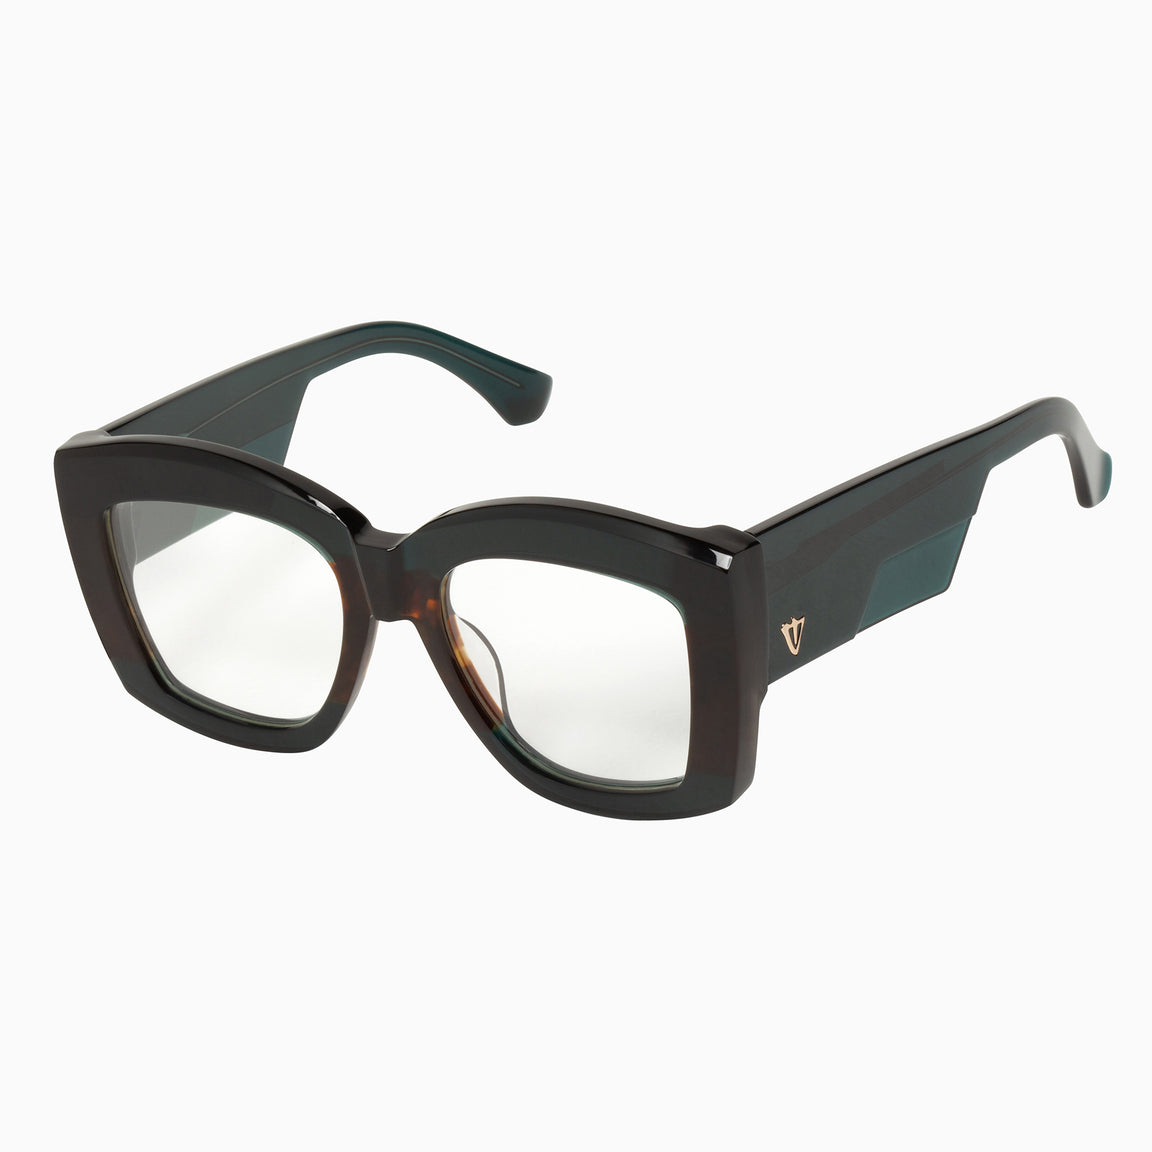 Shop Square Frame Glasses Online | Valley Eyewear USA